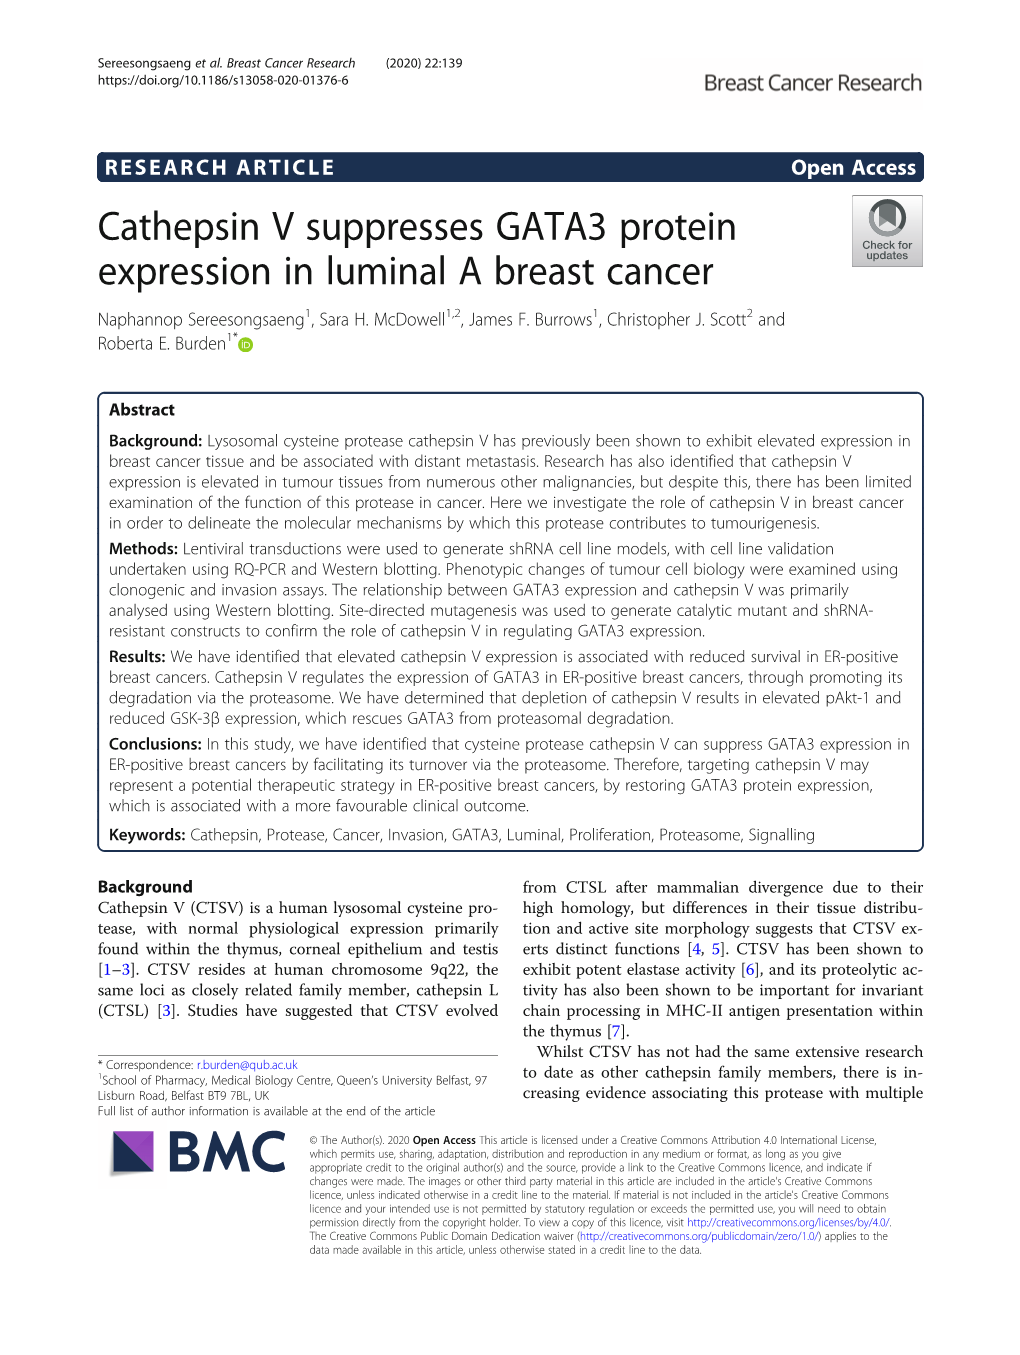 Cathepsin V Suppresses GATA3 Protein Expression in Luminal a Breast Cancer Naphannop Sereesongsaeng1, Sara H